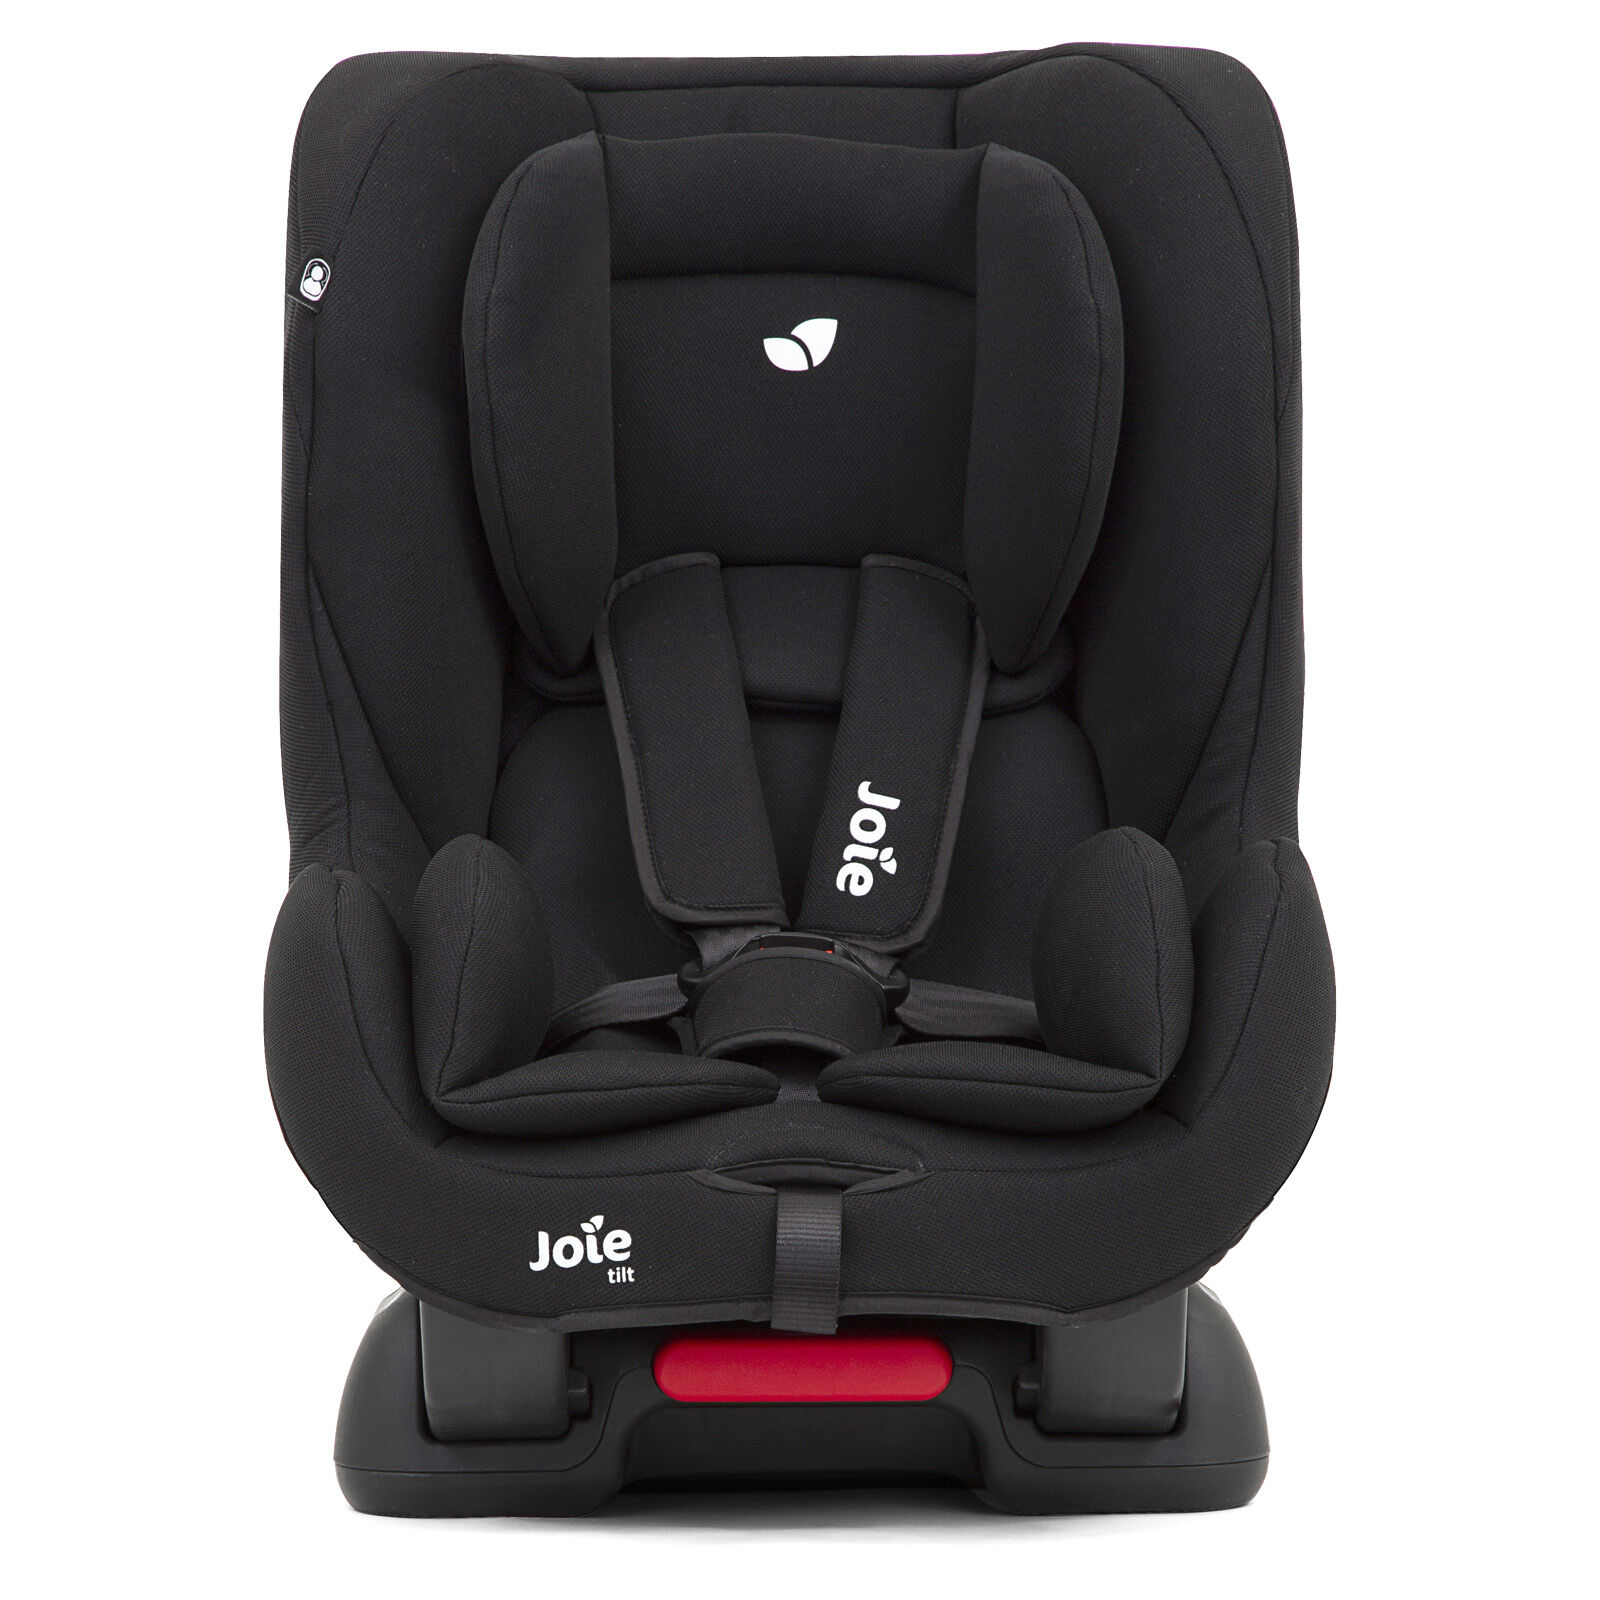 Joie Tilt Group 0+/1 Baby Car Seat - Black